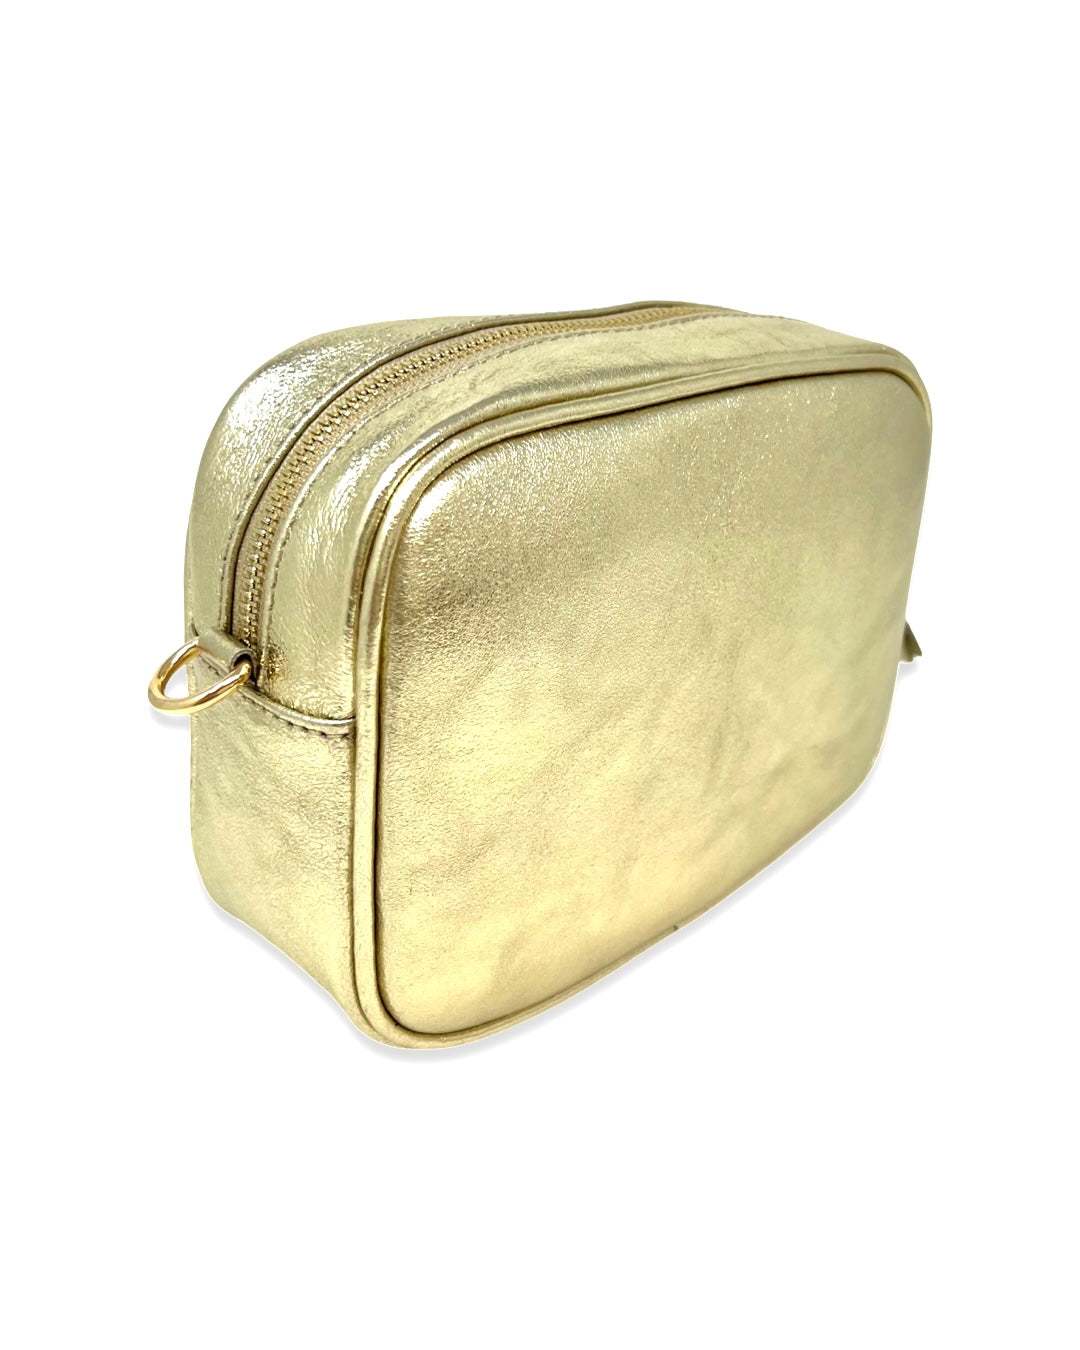 Firenze Bag in Metallic Gold